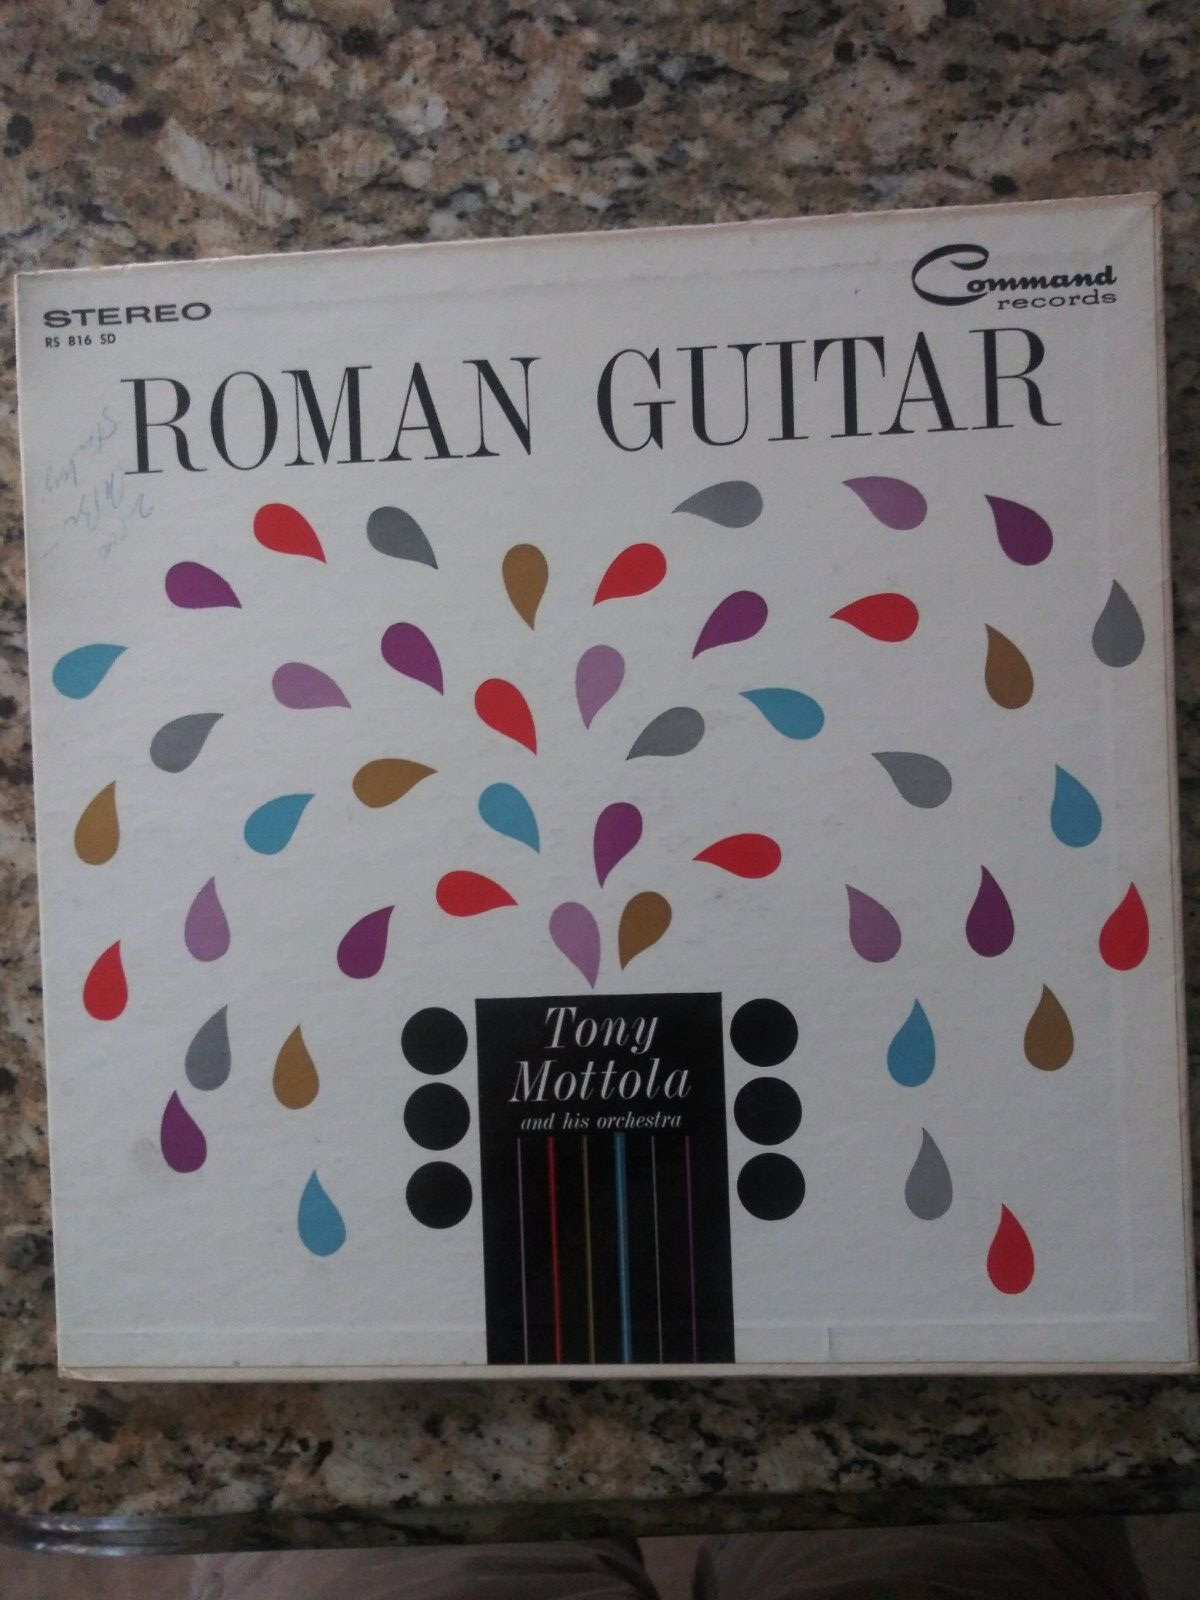 Roman Guitar Tony Mottola 1960 Vintage Vinyl Record Album LP Command Records